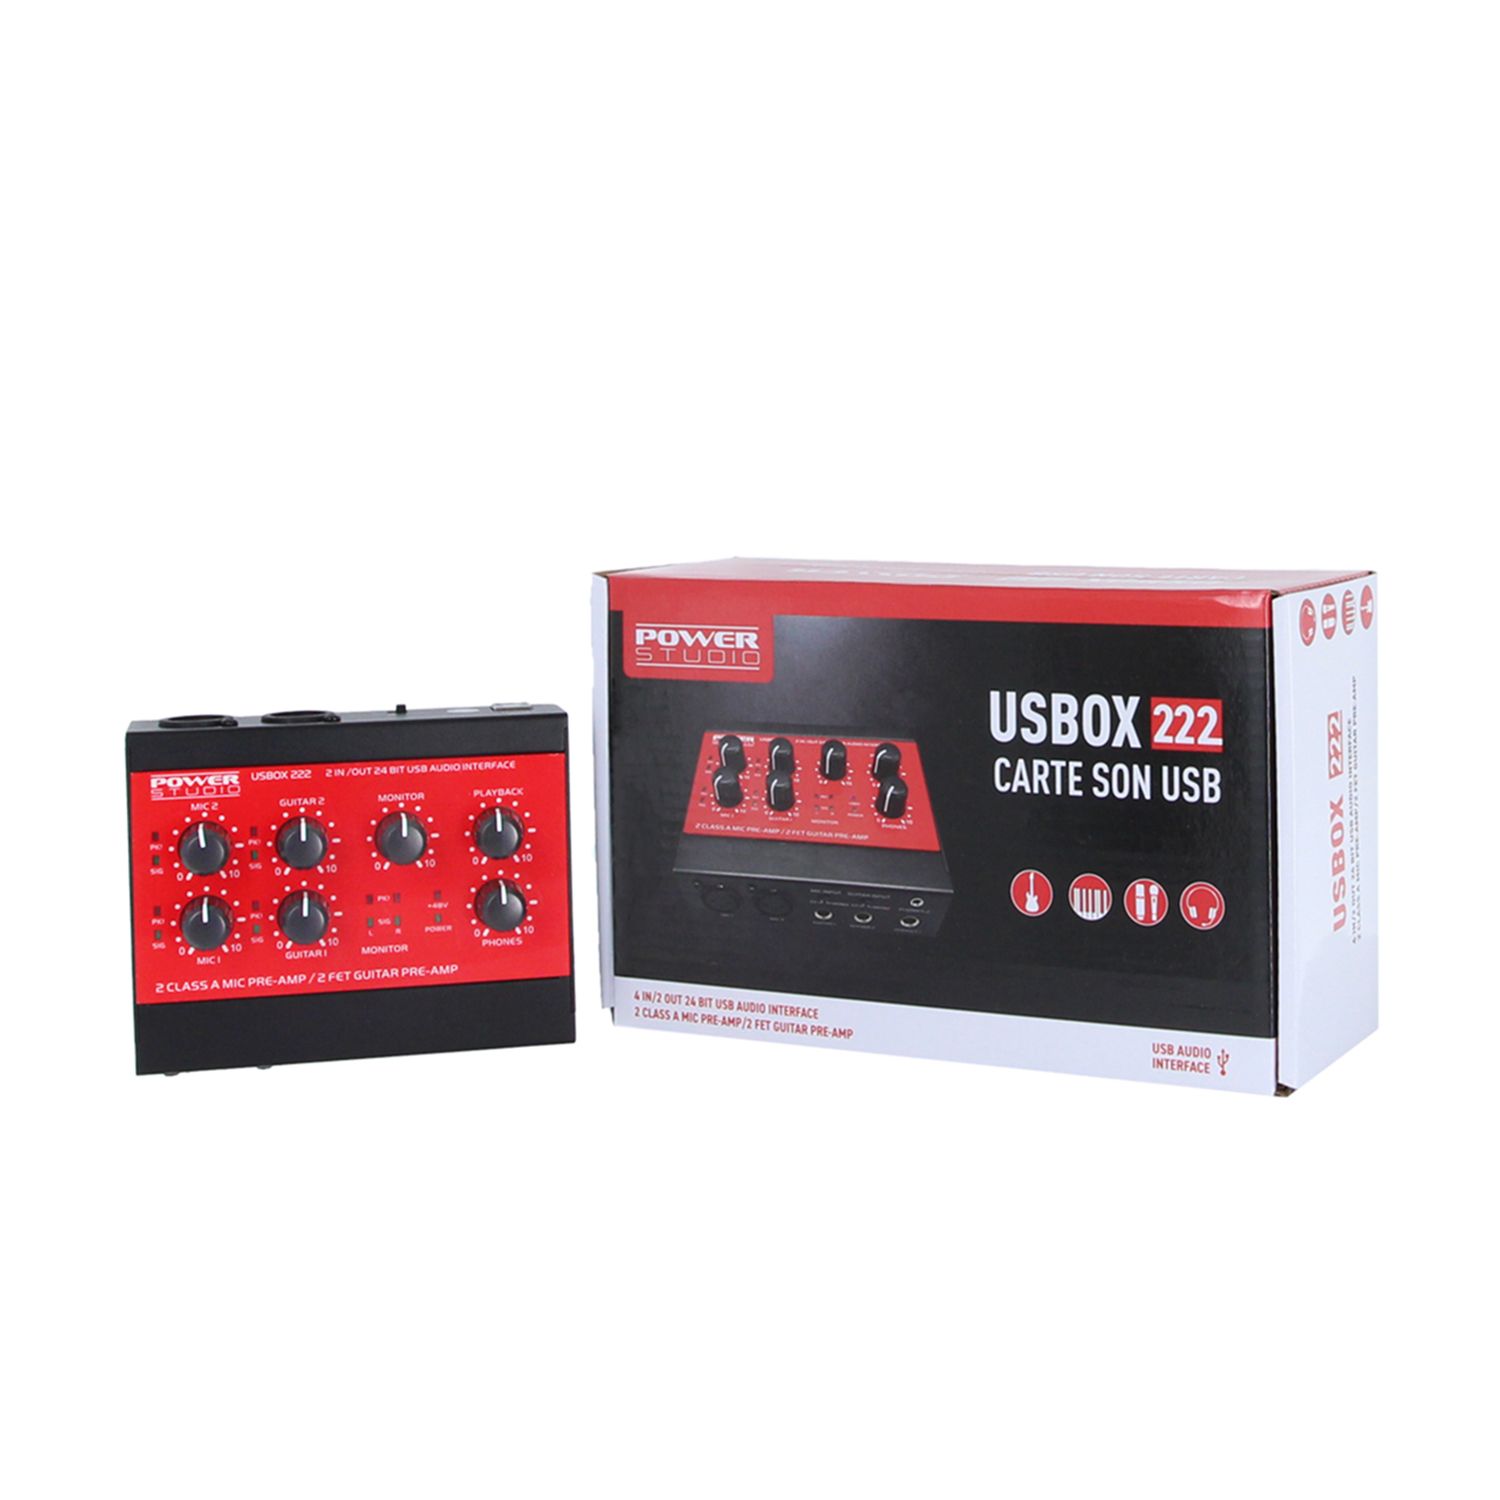 Power Studio Usbox 222 - USB audio interface - Variation 4